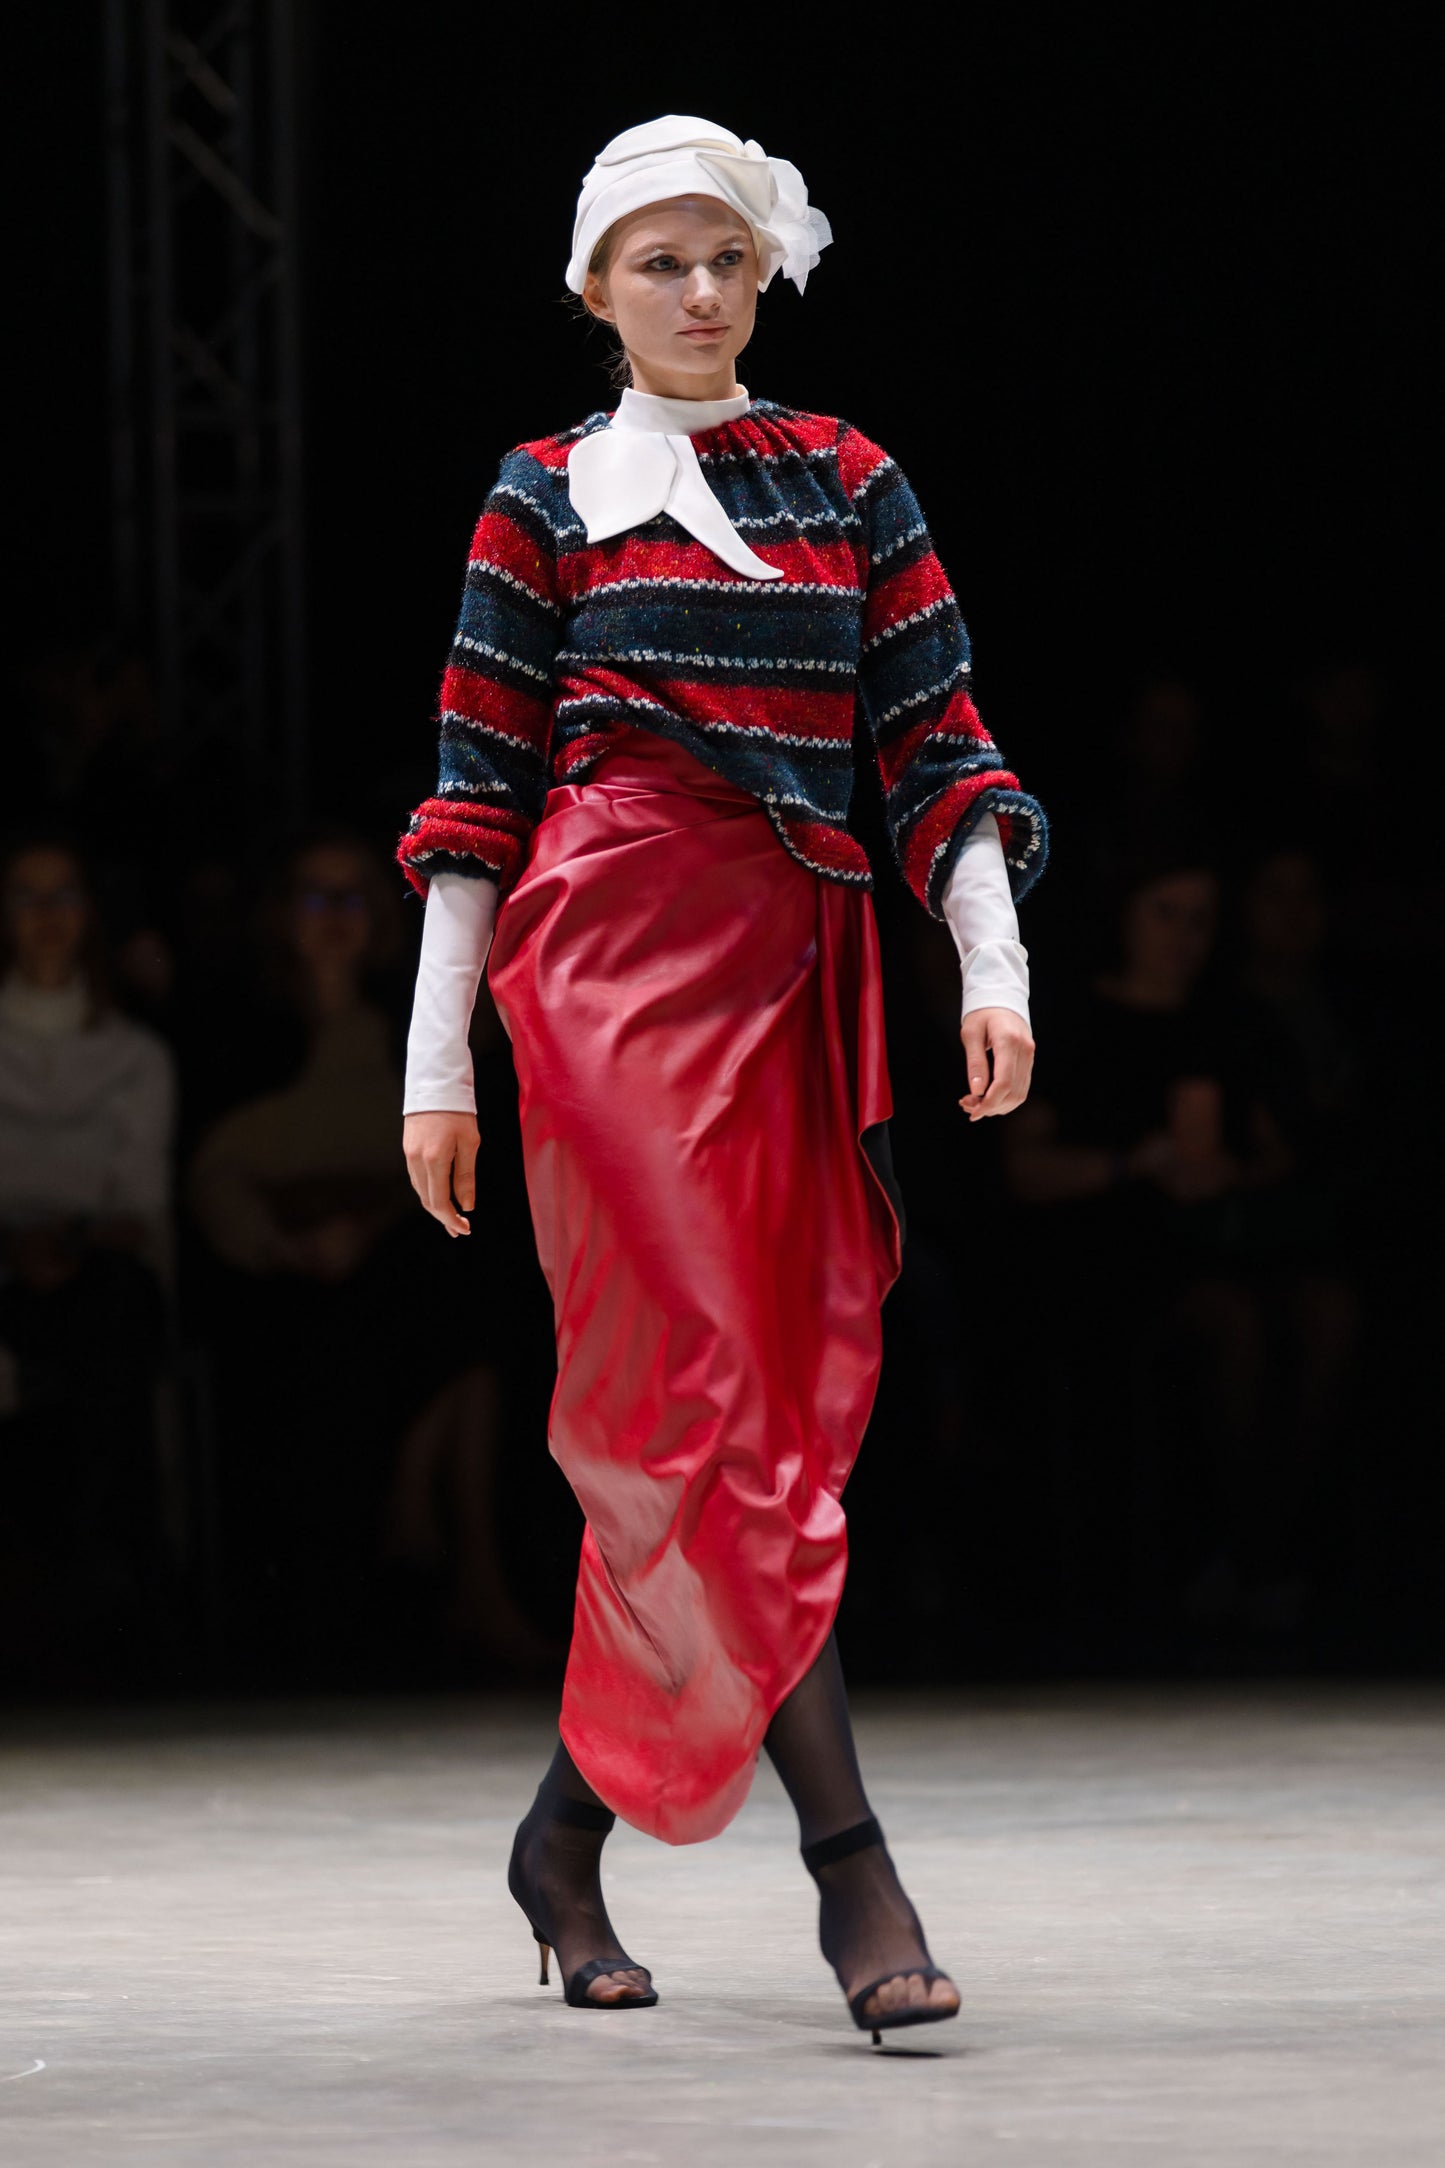 Designer Soft Faux Leather Asymmetrical Midi Skirt Red